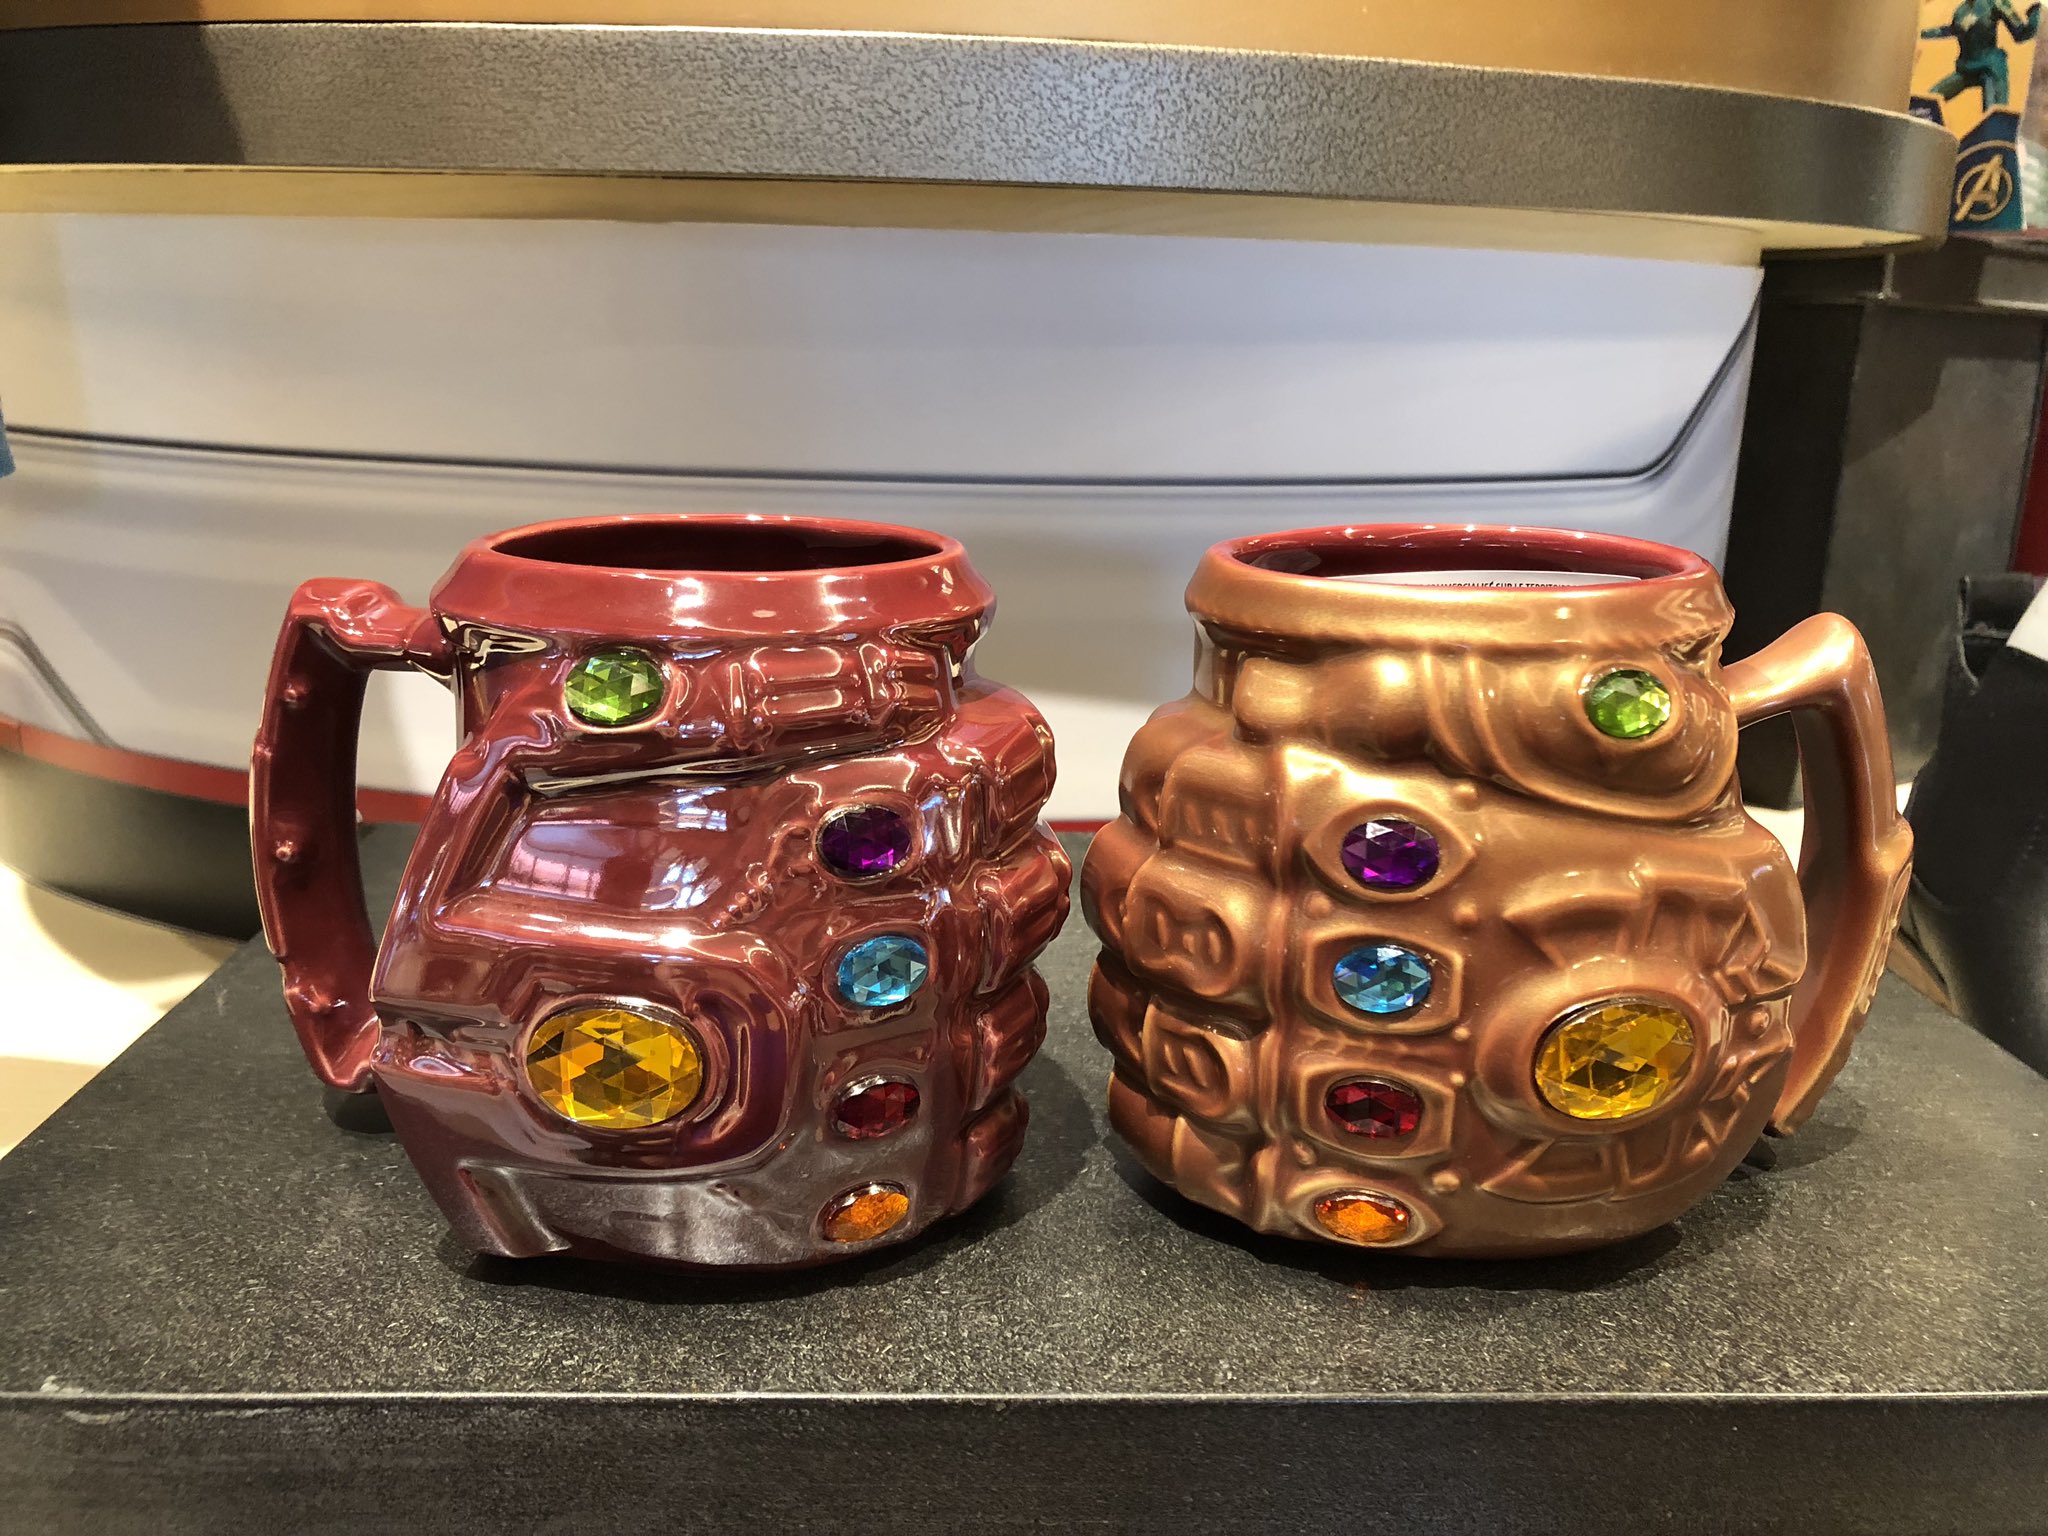 Disney Store Infinity Gauntlet Mug, Avengers: Endgame